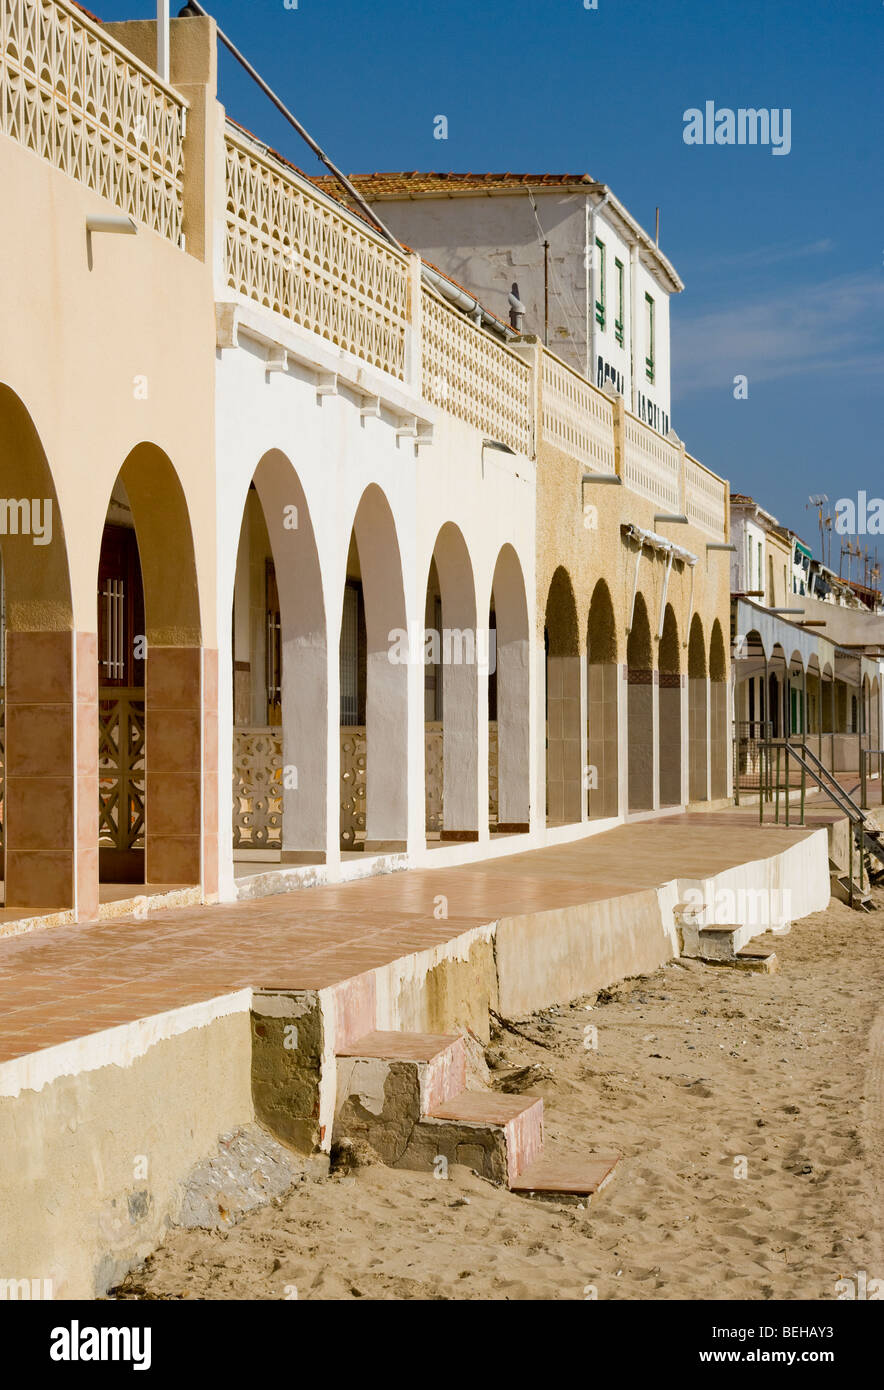 Arched Frontage Of Beachfront Holiday Villas Playa Del Pinet La Marina Spain Stock Photo